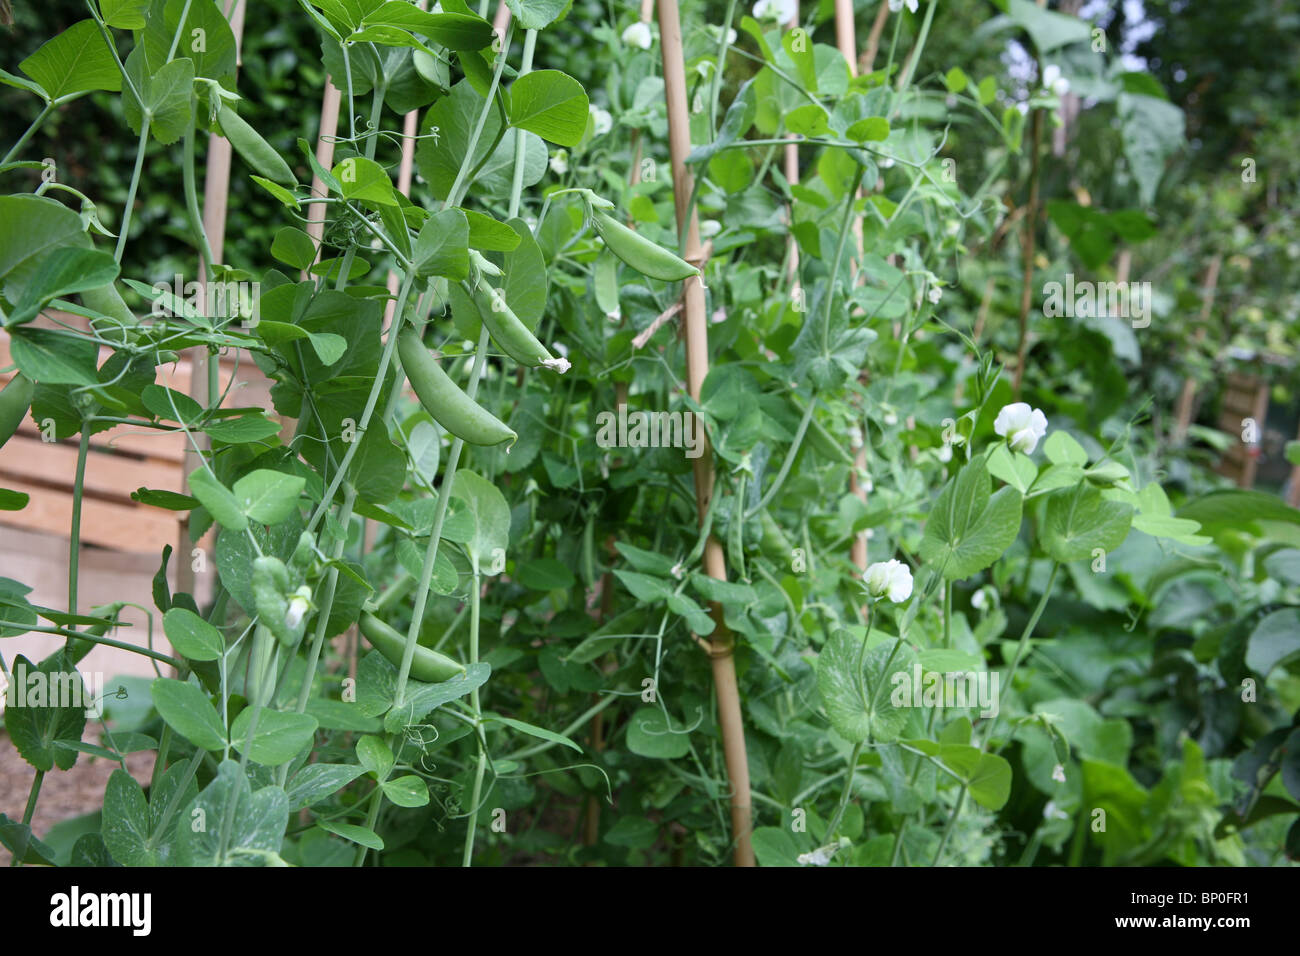 (Pisum sativum var. saccharatum) Mange tout / Snow peas and sugar snaps / Snap peas (Pisum sativum var. macrocarpon) growing outside in a garden Stock Photo